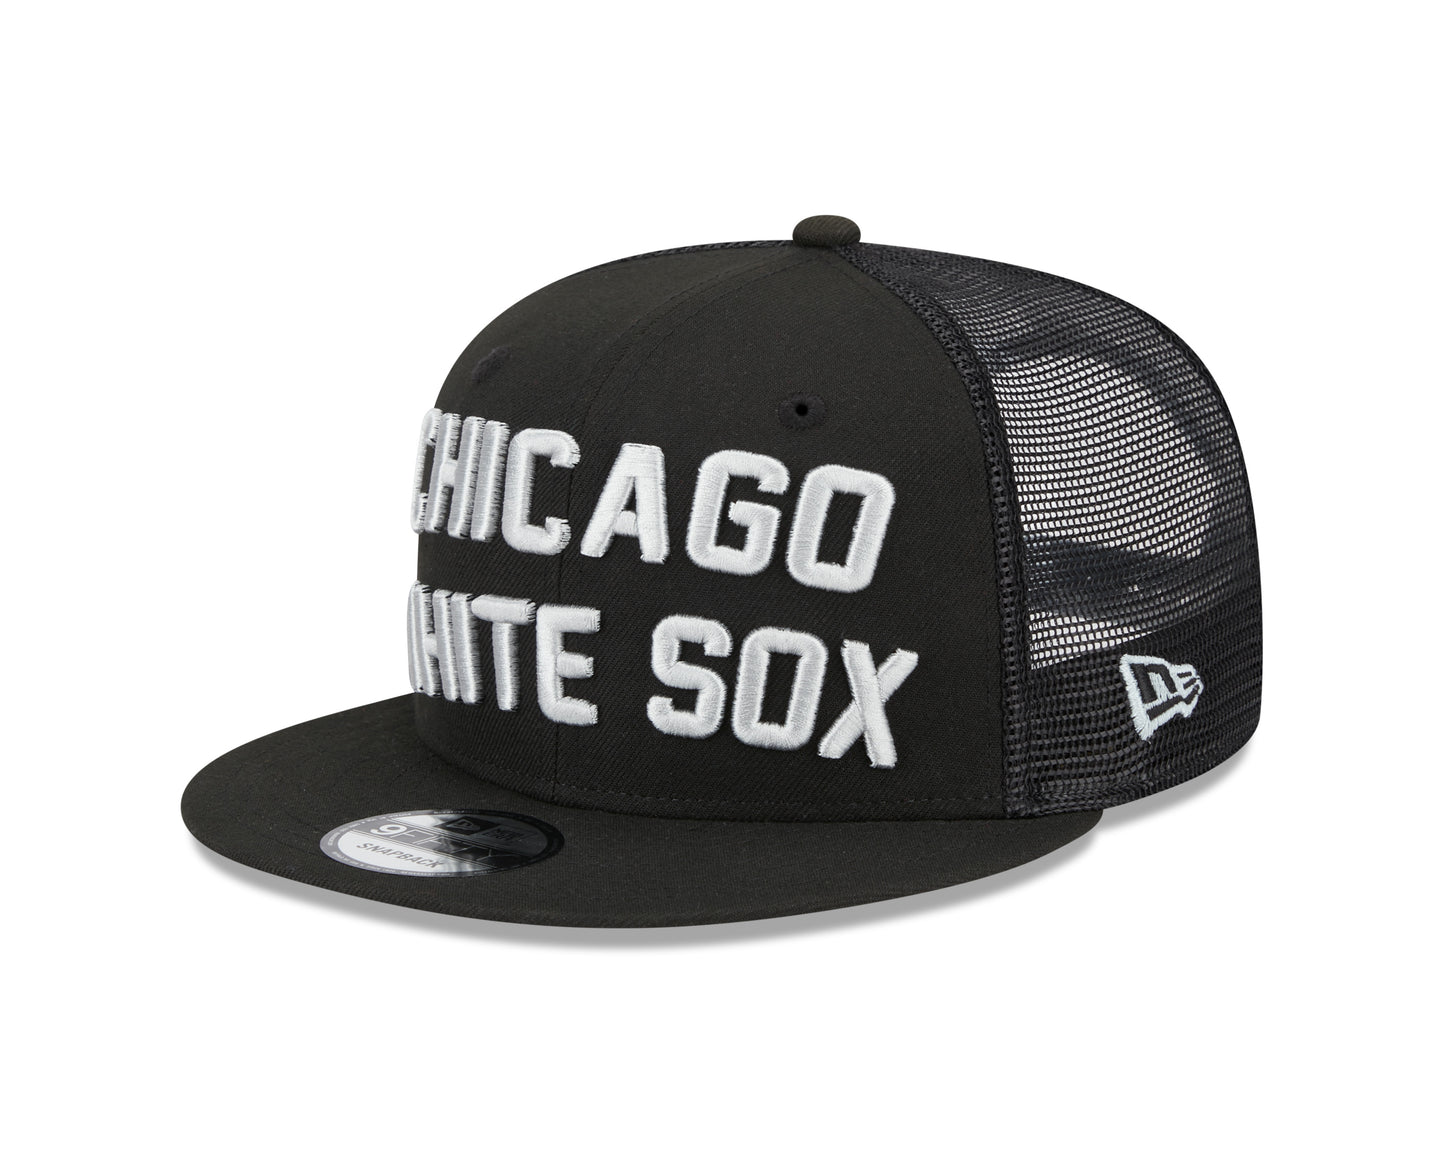 Chicago White Sox New Era Black Stacked 9FIFTY Mesh Trucker Snapback Hat